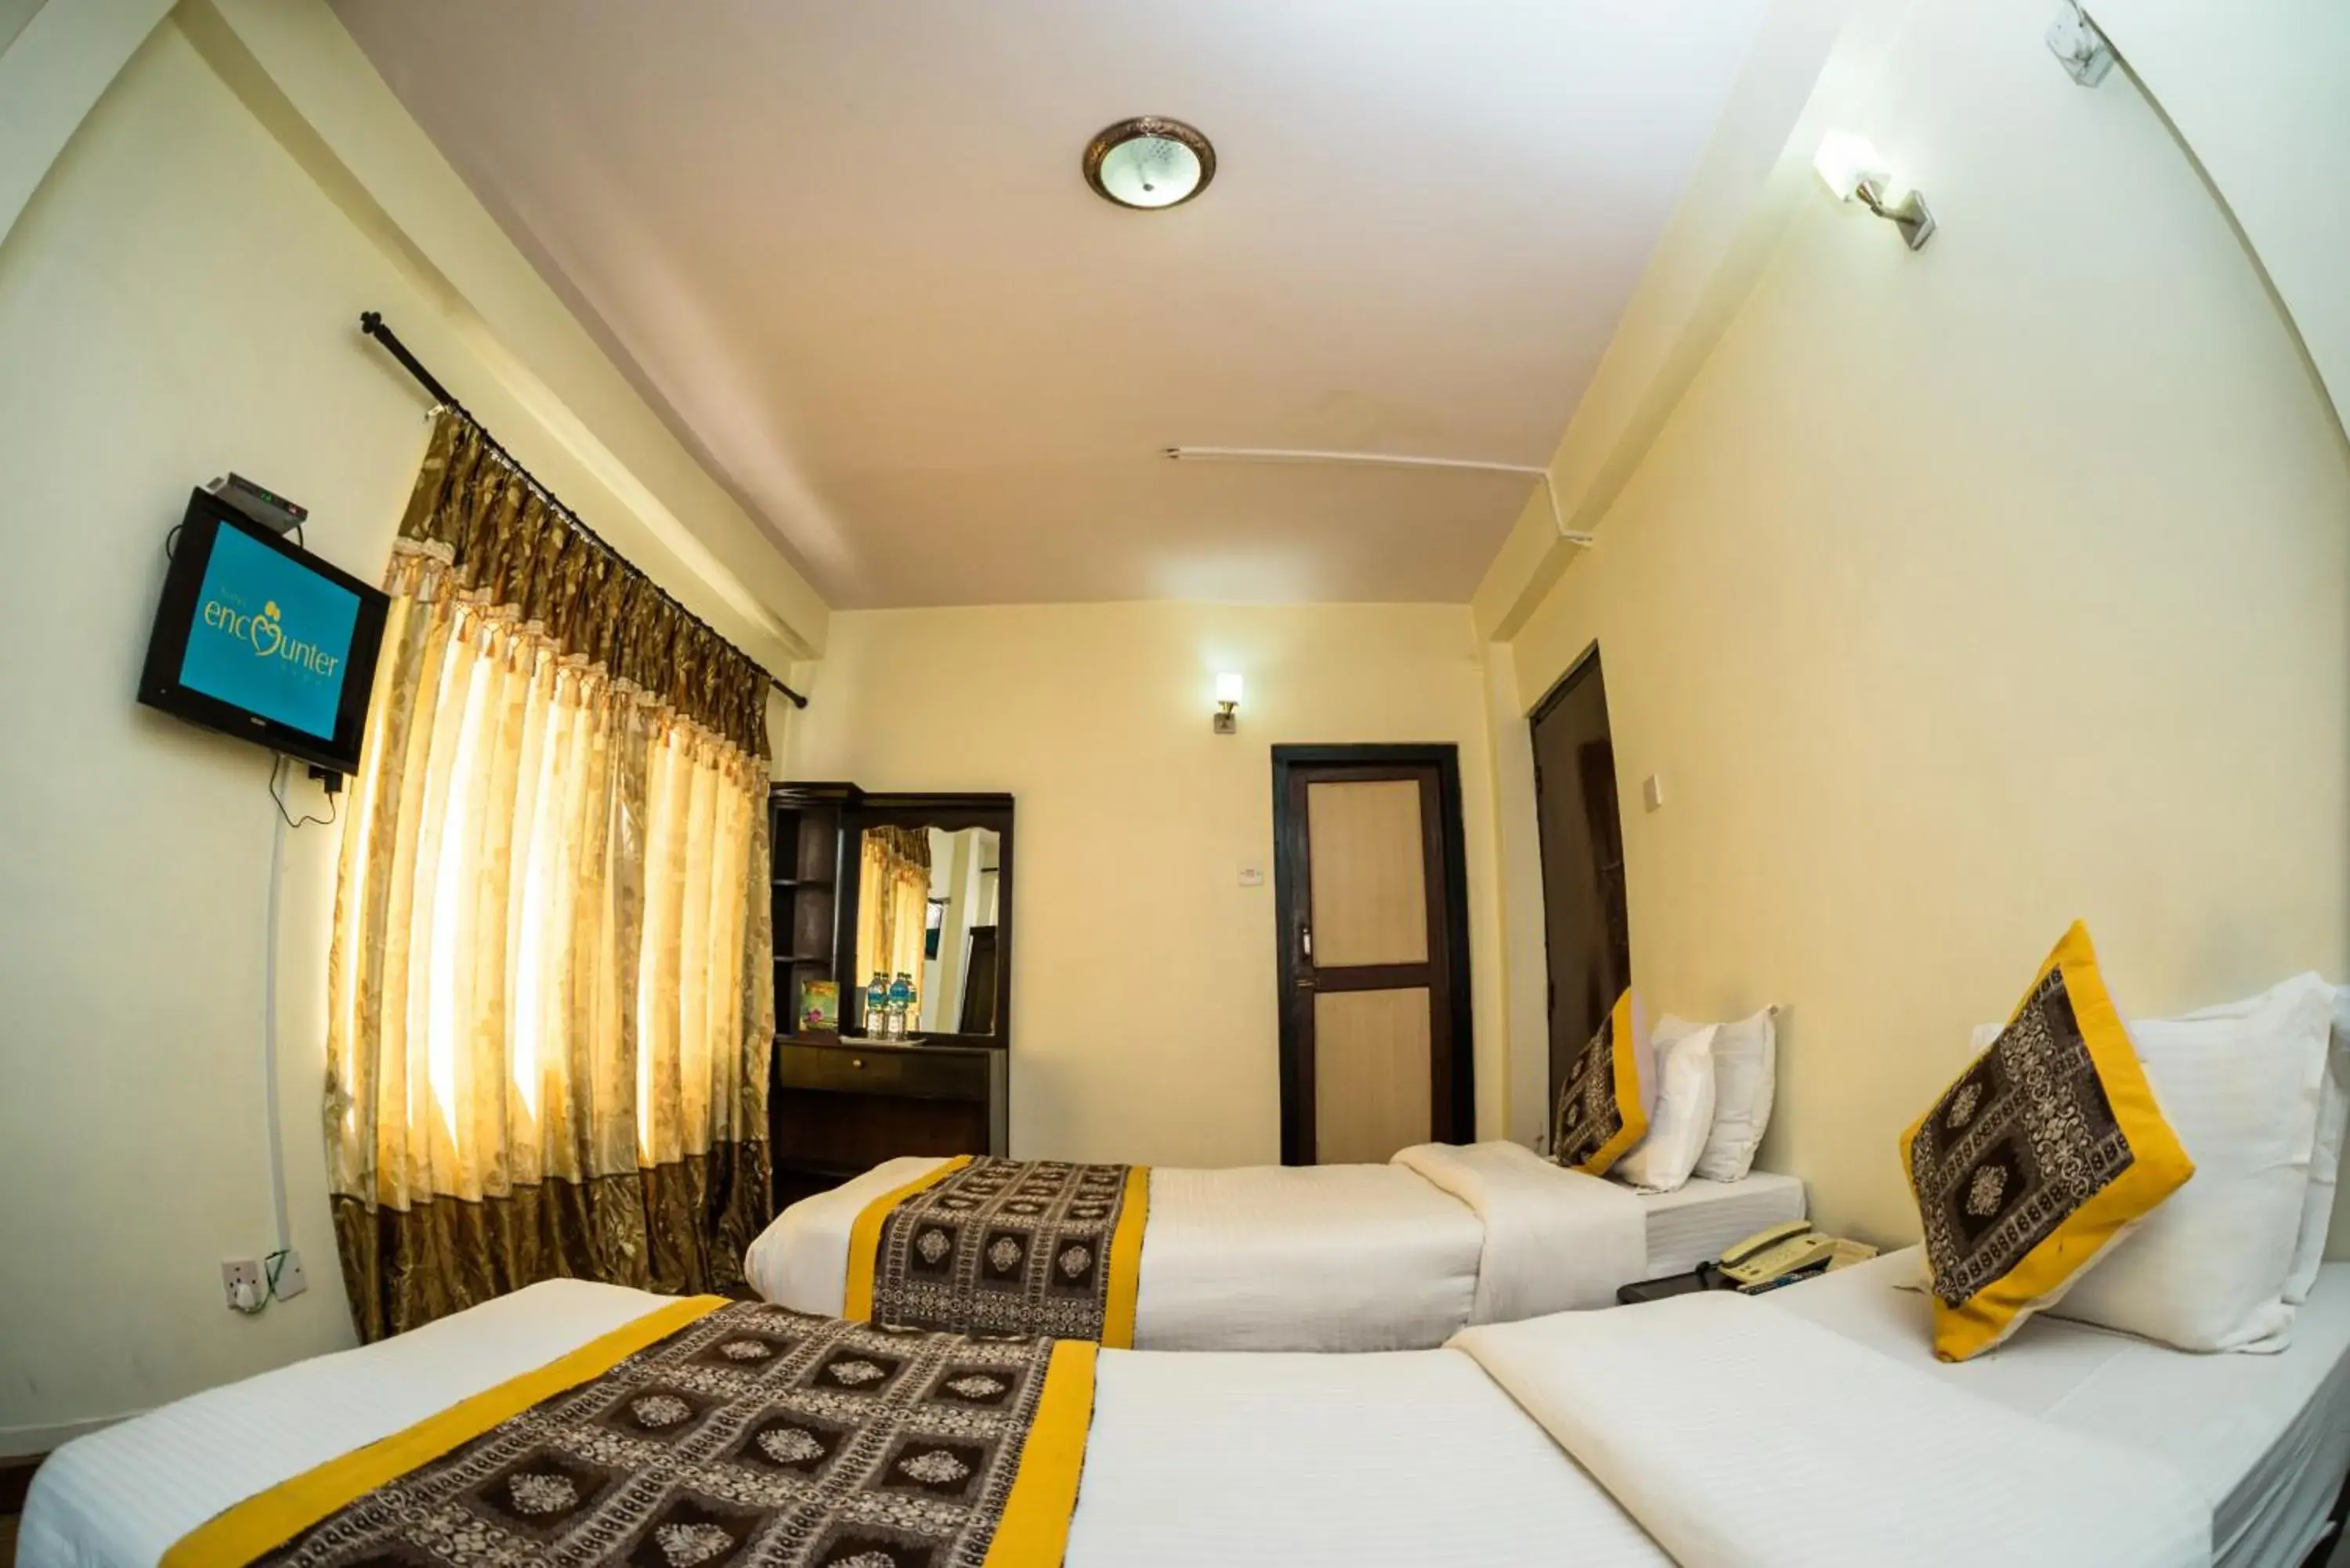 Bed in Hotel Encounter Nepal